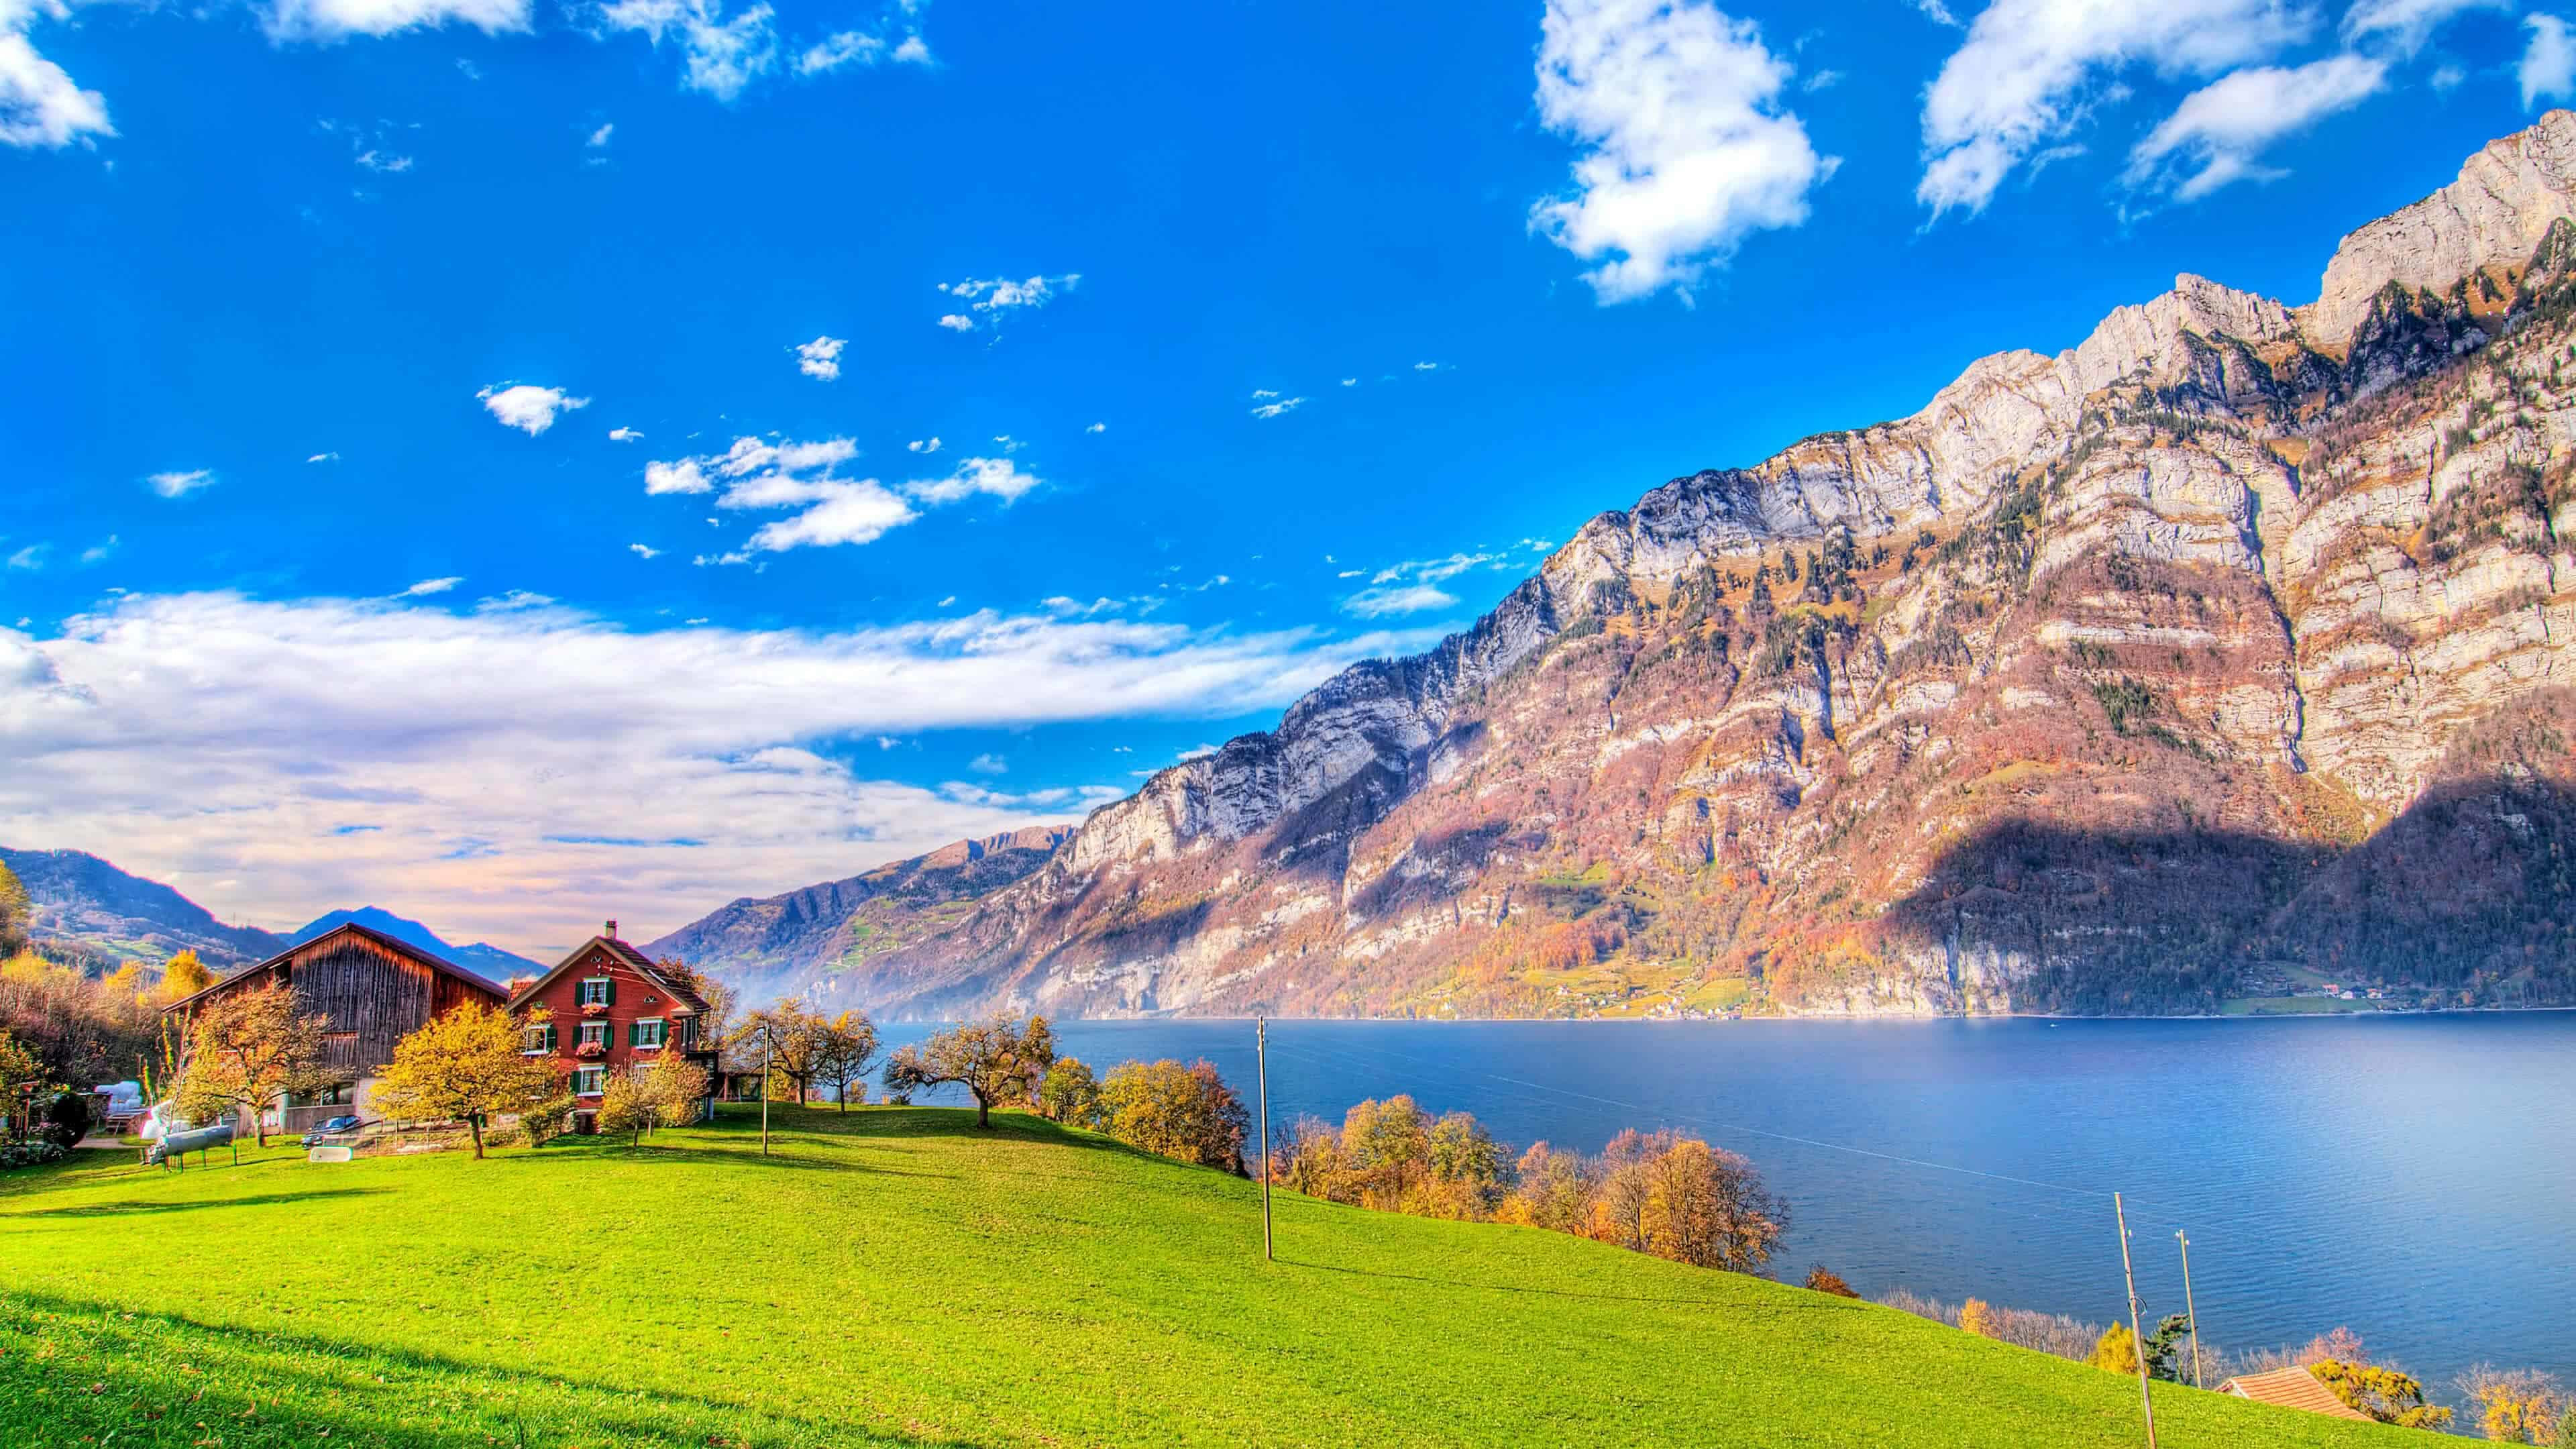 Best ideas about 4K Landscape Wallpaper
. Save or Pin Quarten Switzerland Landscape UHD 4K Wallpaper Now.